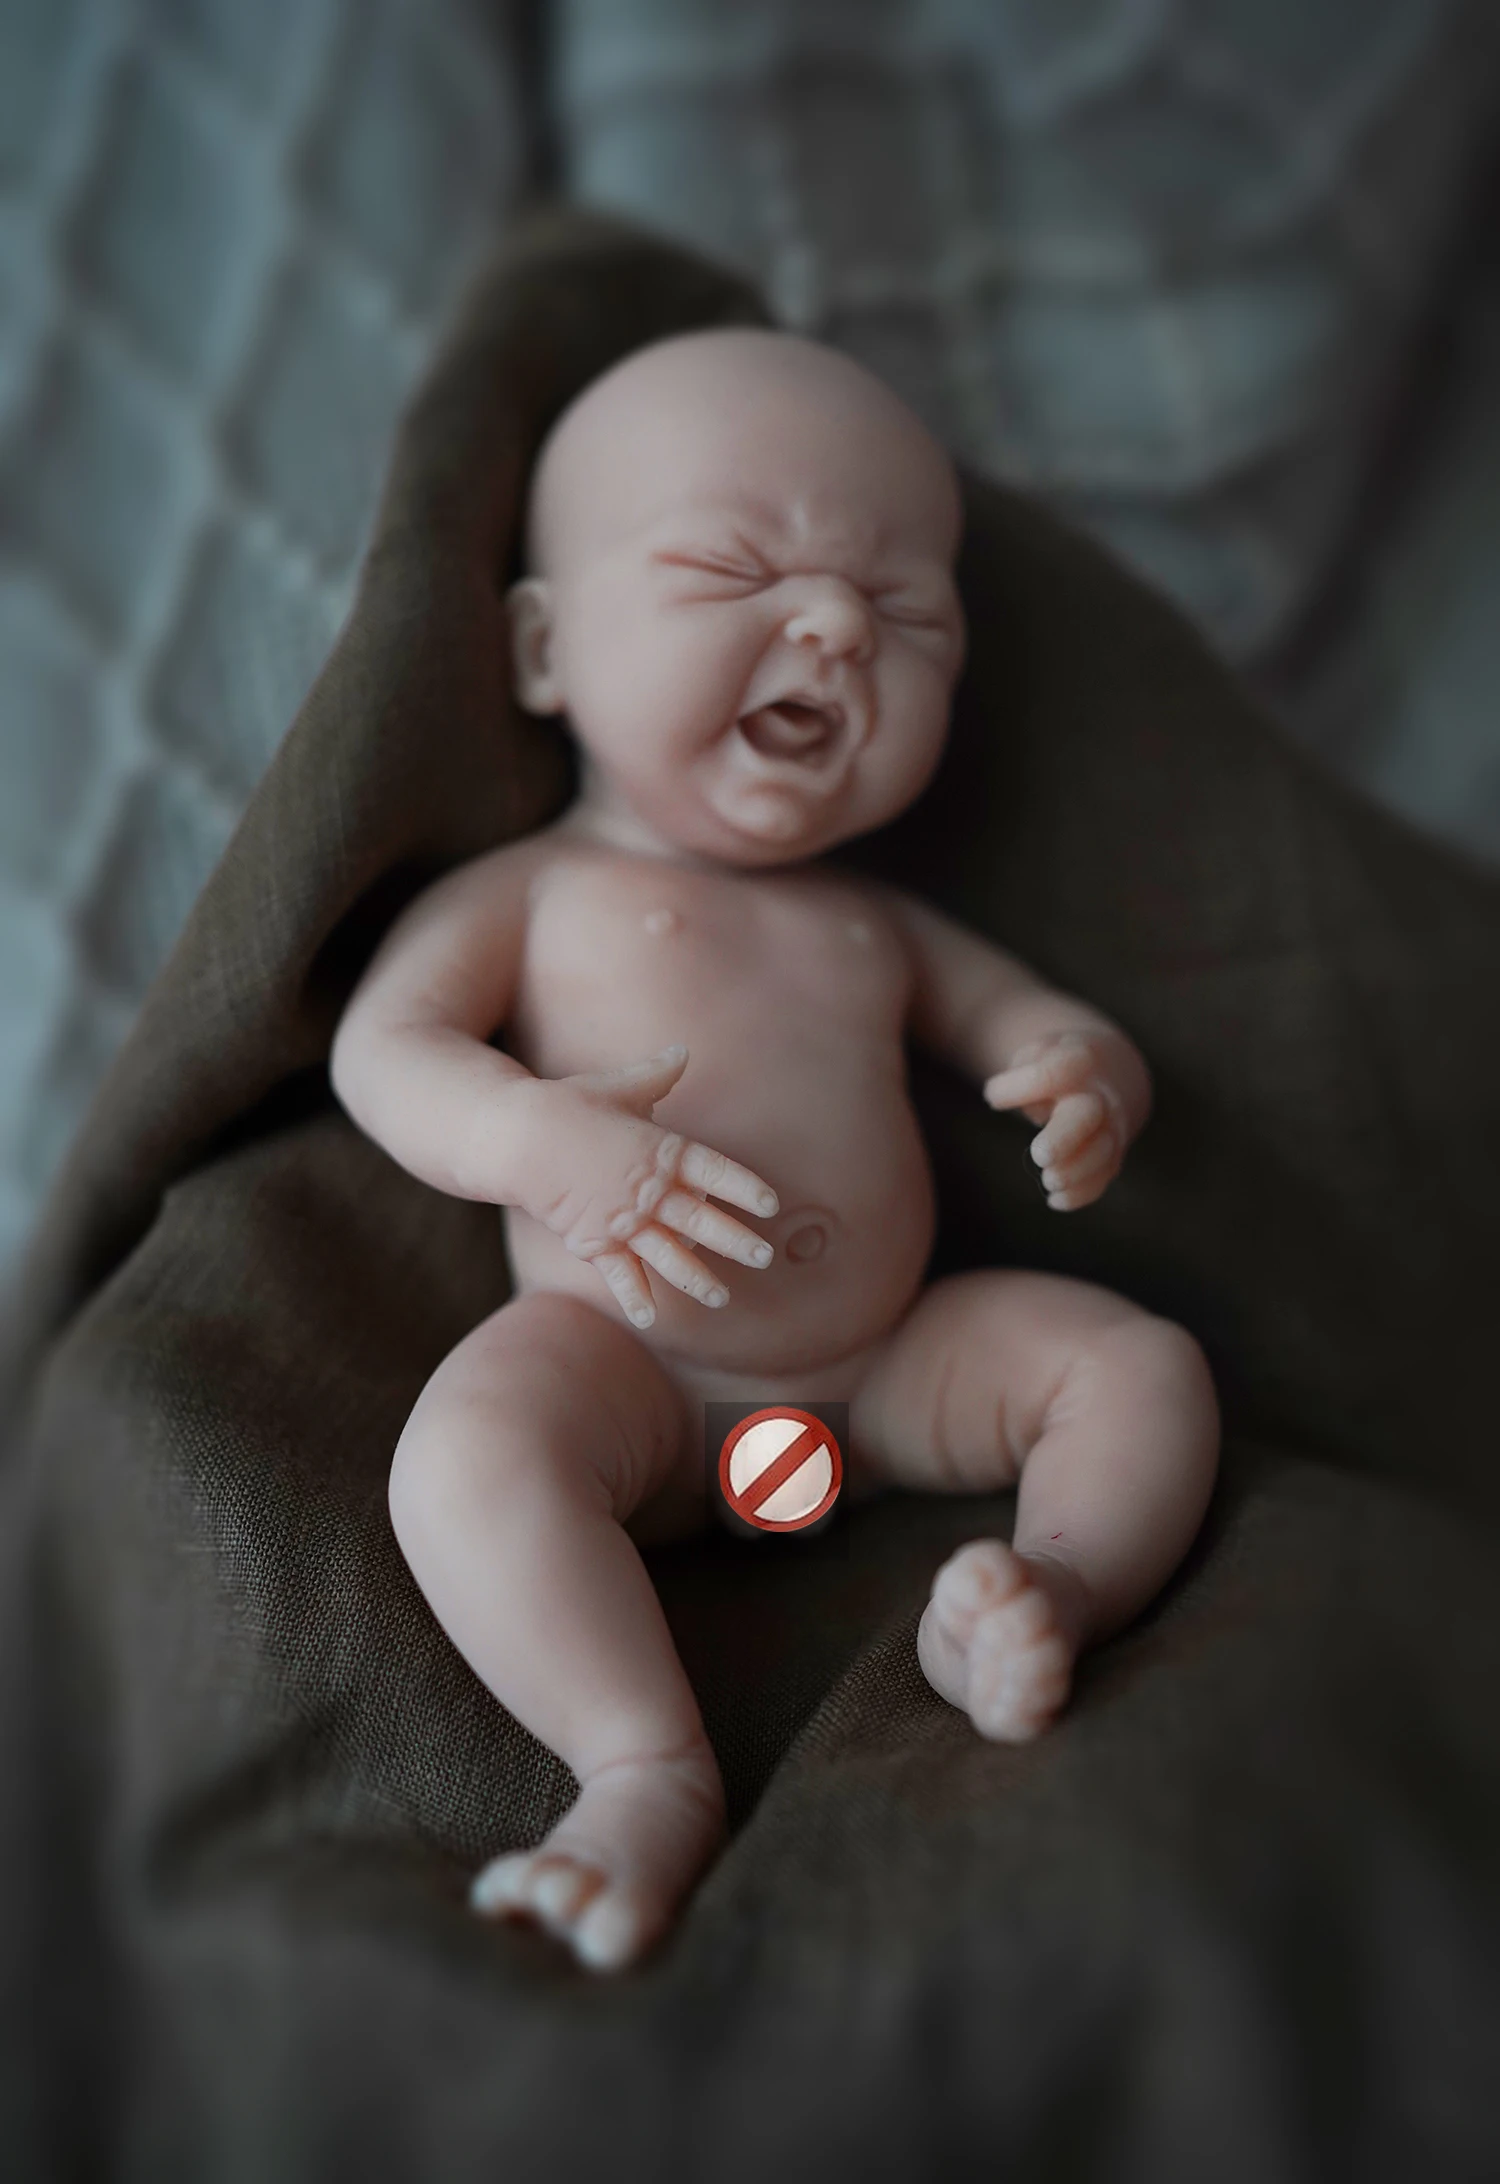 Tanio 7 "Boy Micro Preemie Full Body Silicone CryBaby Doll"